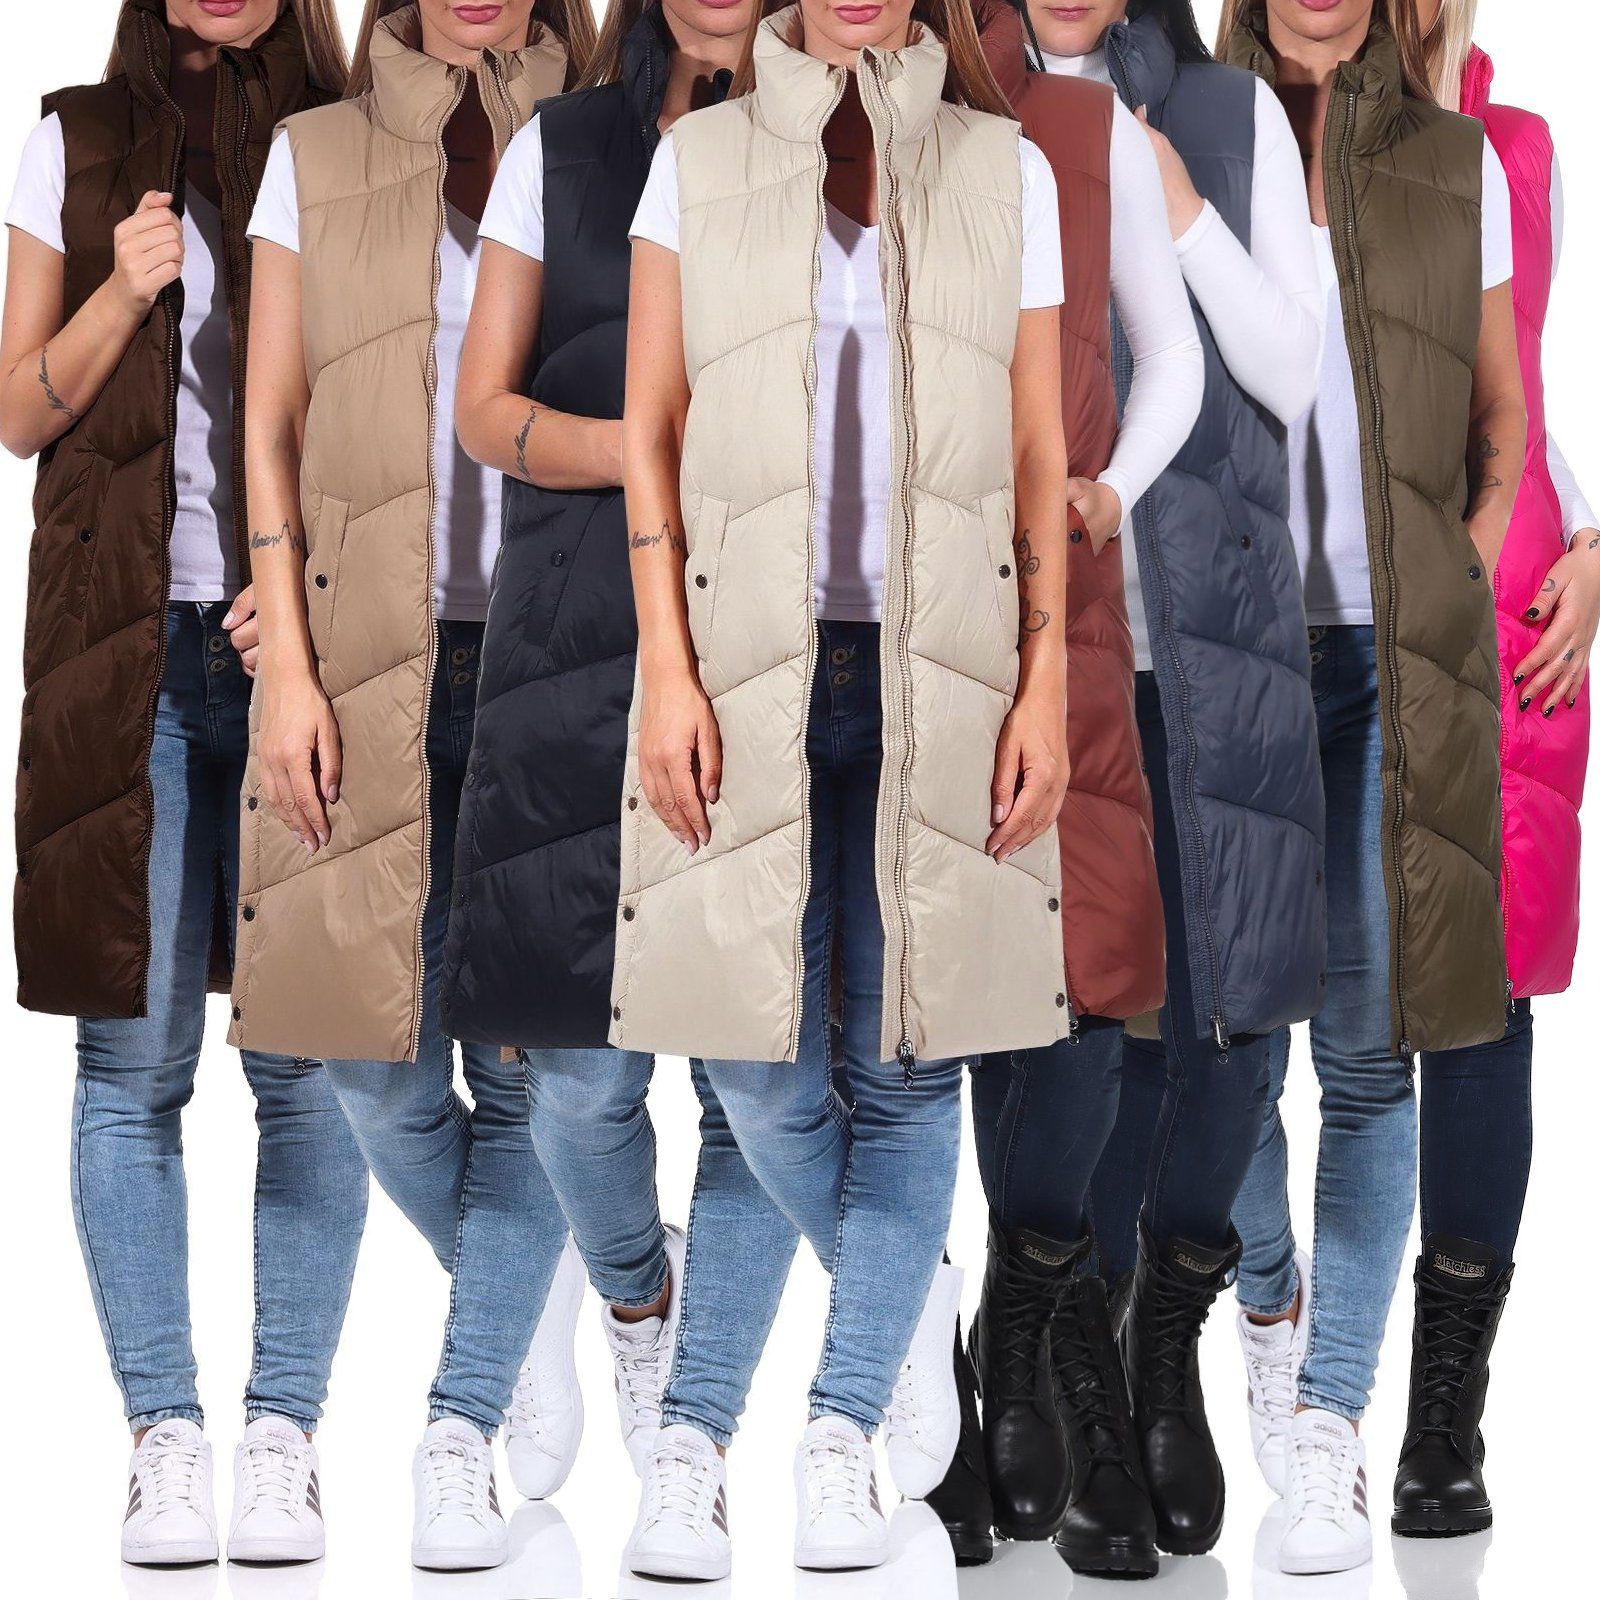 Vero Moda Damen lange Steppweste Weste Waistcoat gesteppt Übergang VMUppsala  | eBay